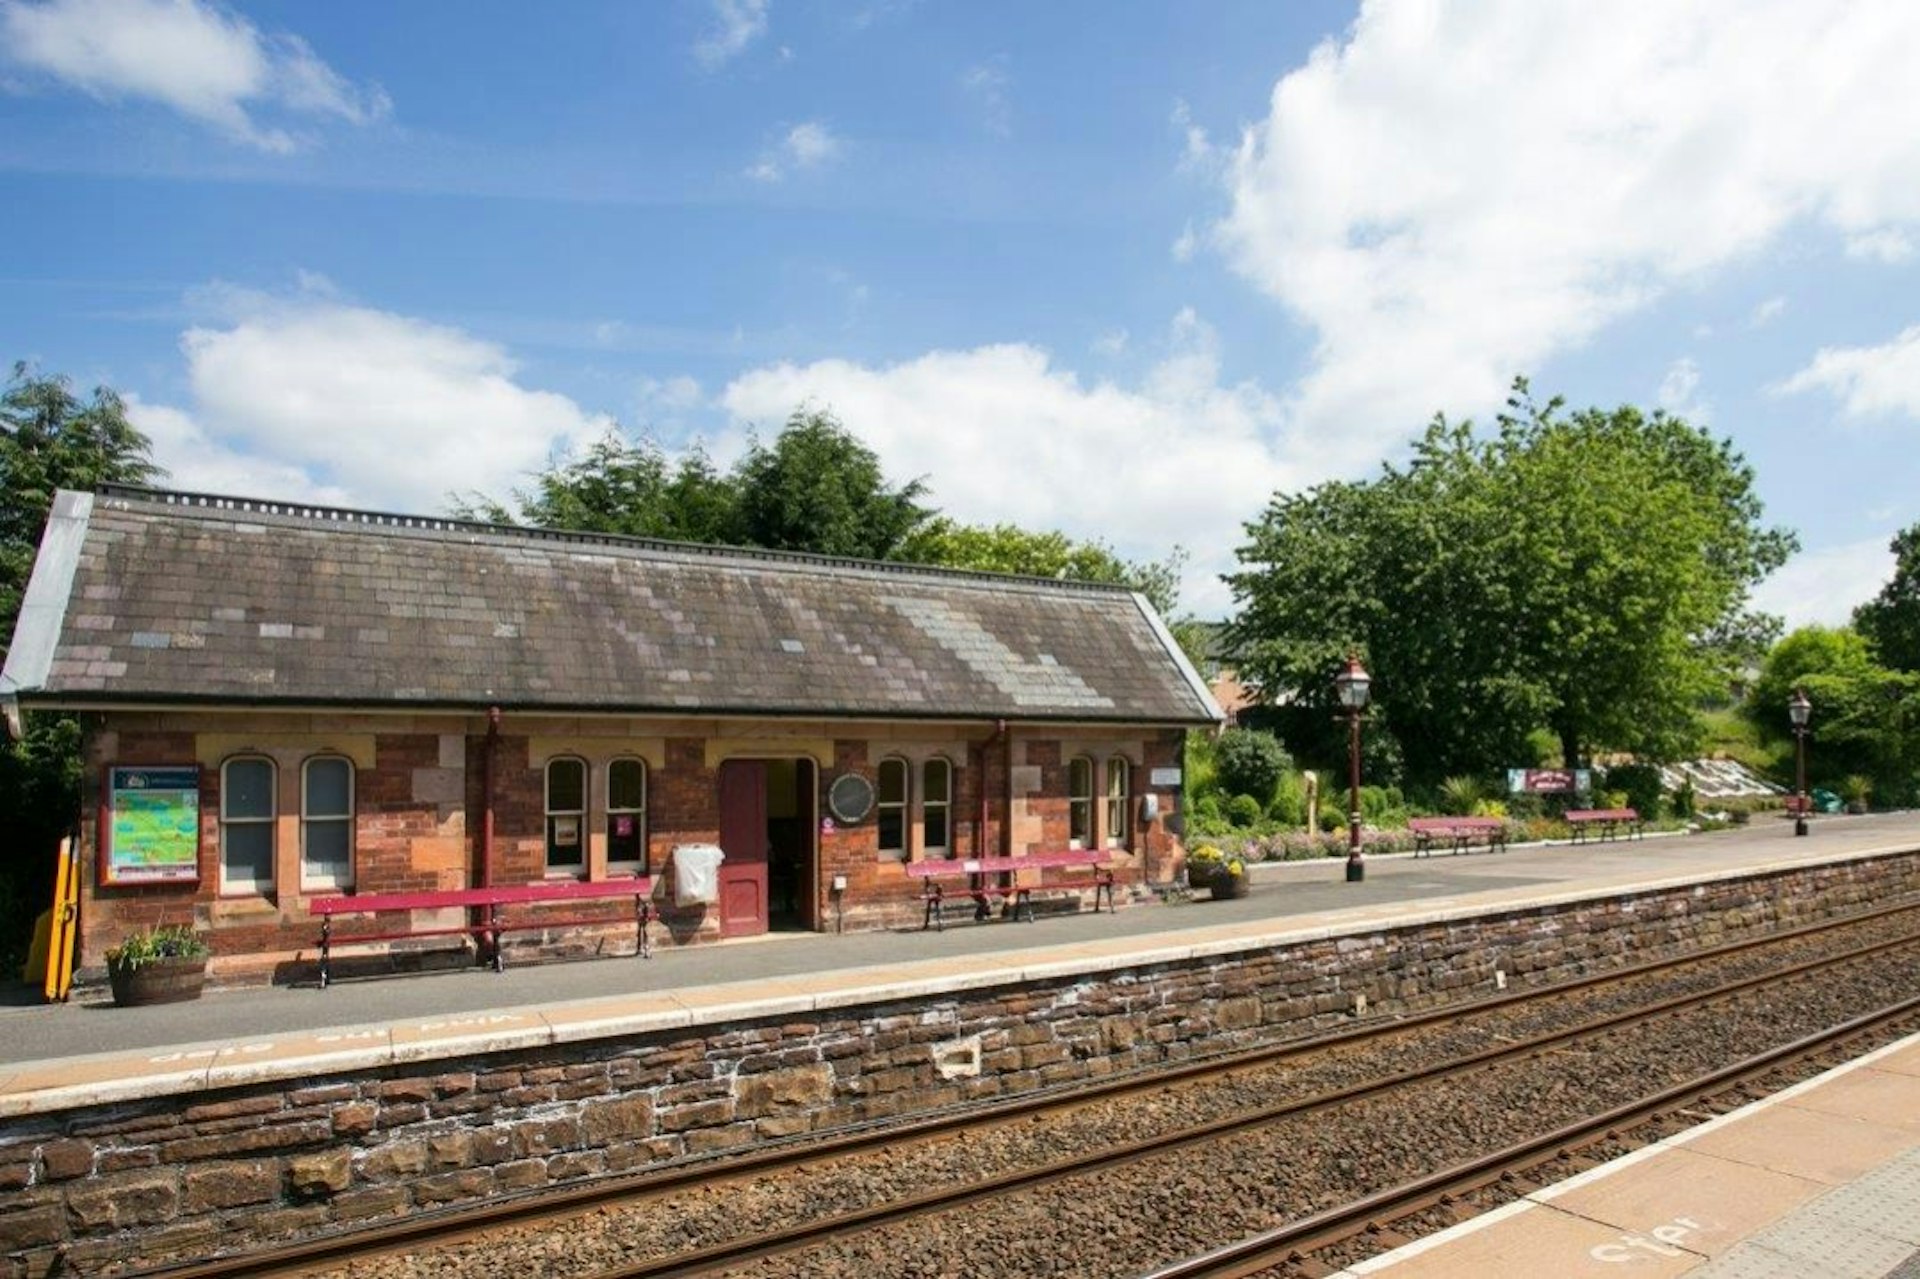 Appleby Station in Cumbria